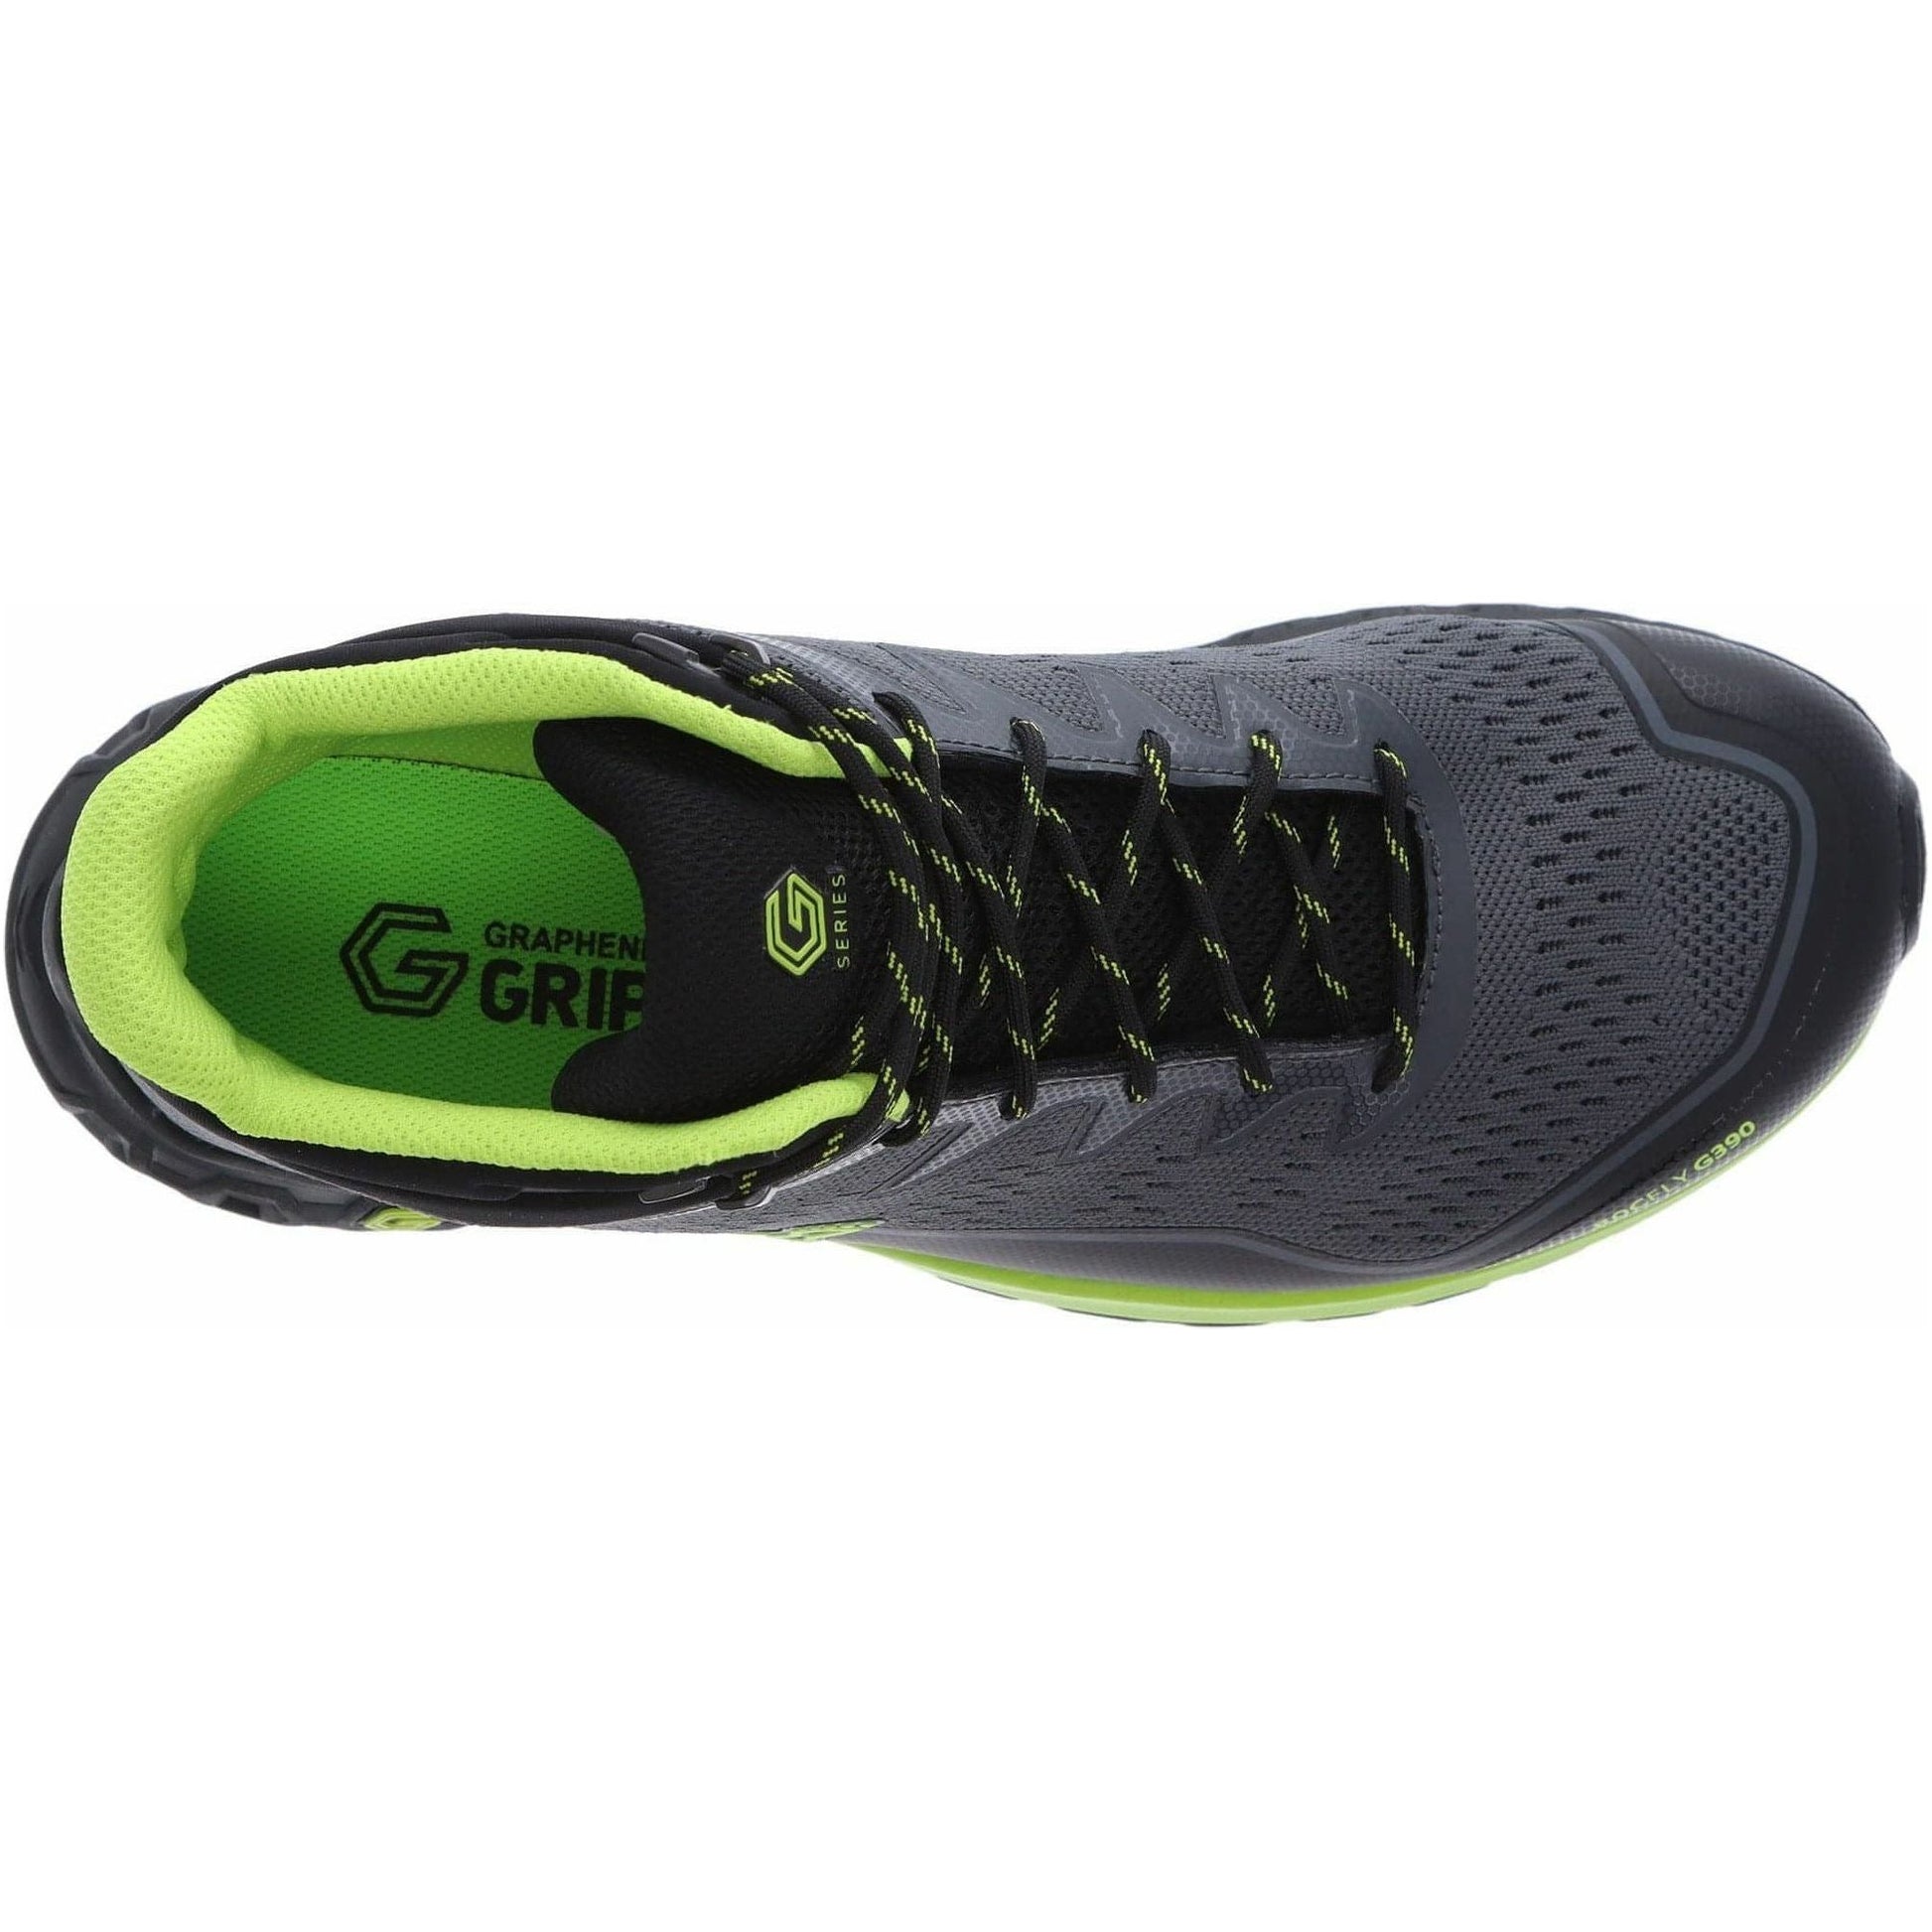 Inov8 RocFly G 390 Mens Walking Boots - Grey - Start Fitness